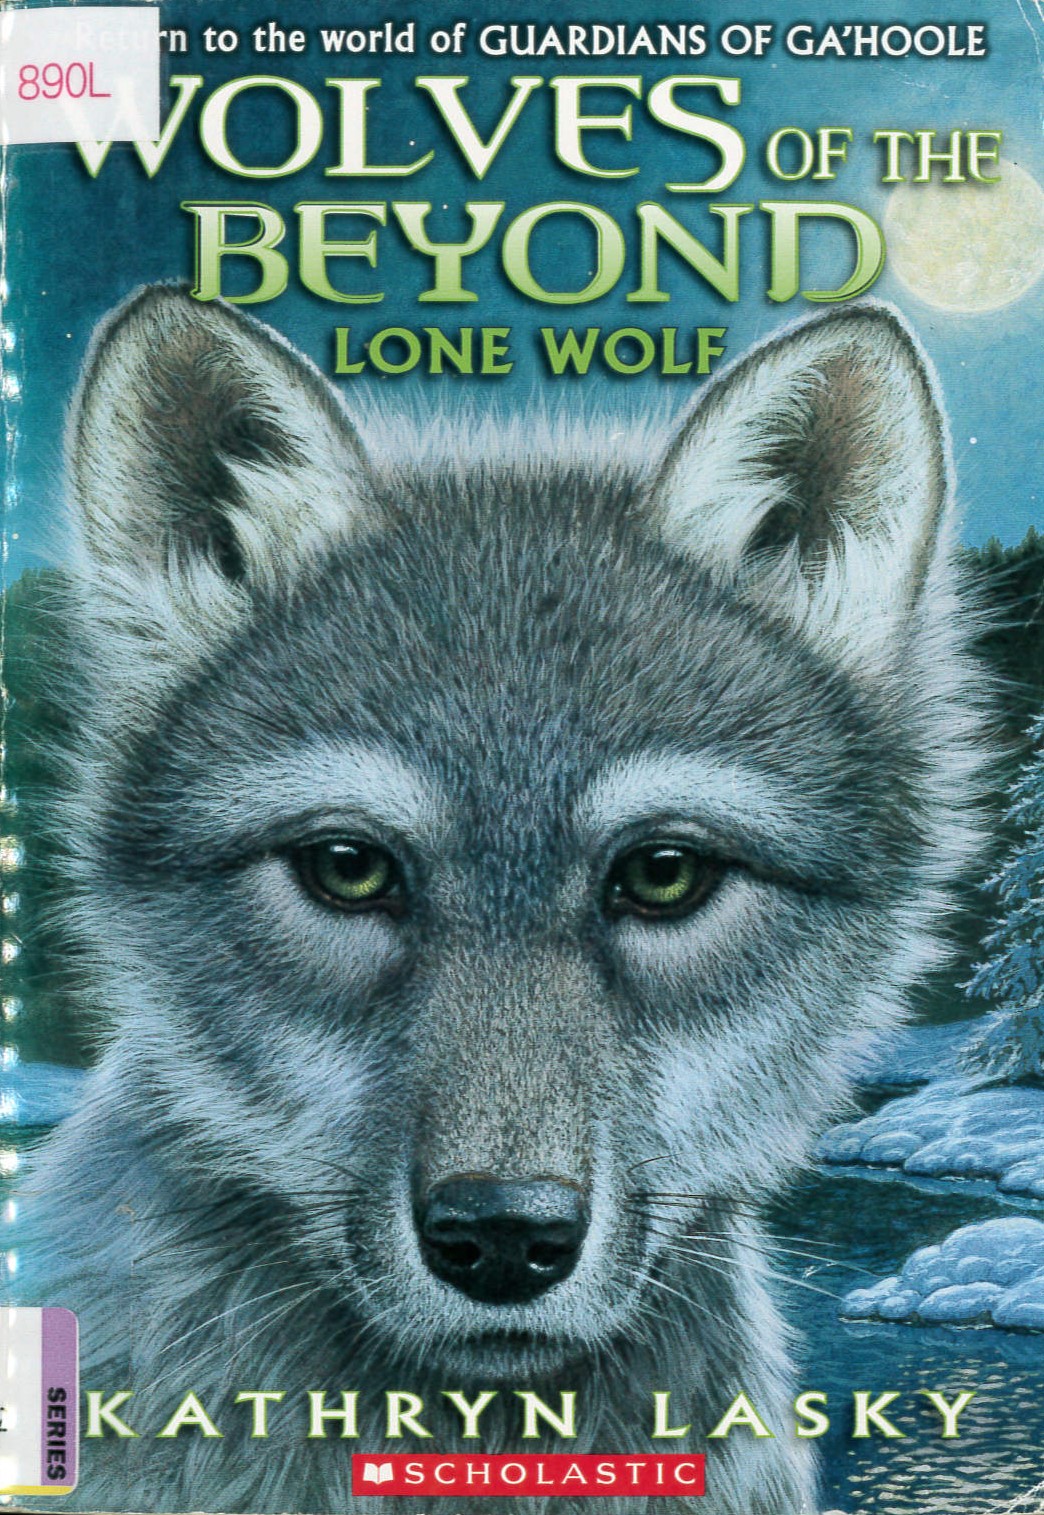 Lone wolf /